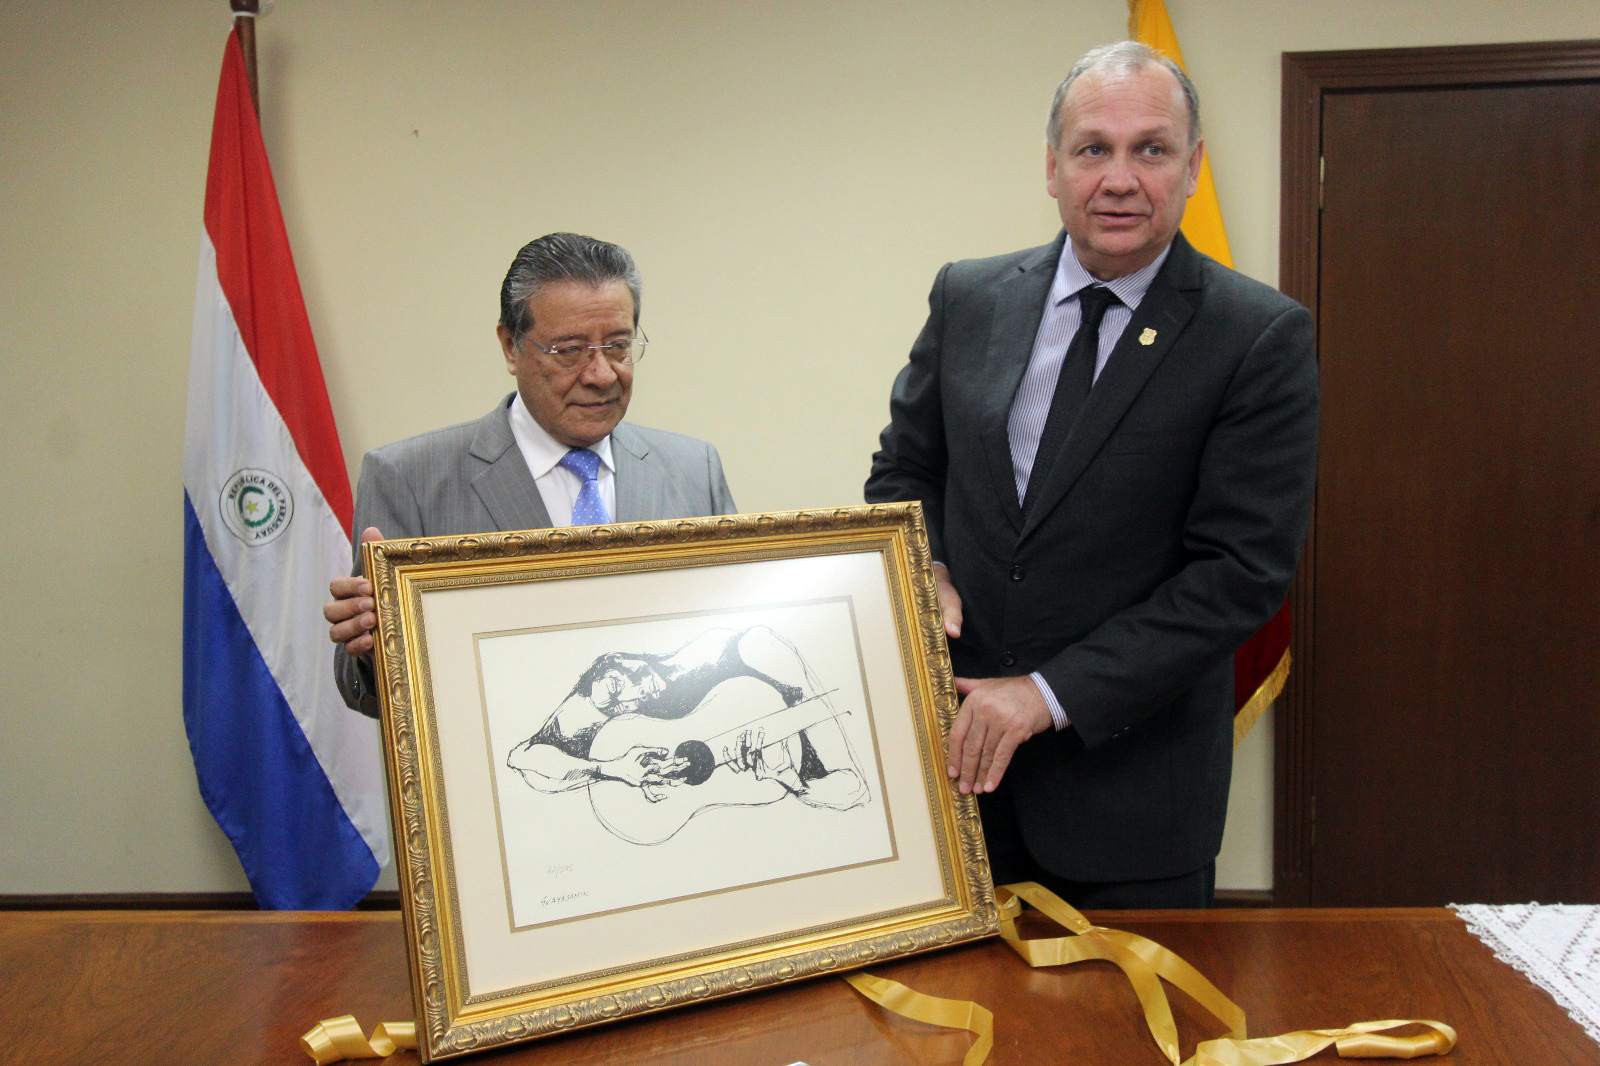 Embajador Ecuatoriano obsequió serigrafía de Osvaldo Guayasamil al Intendente